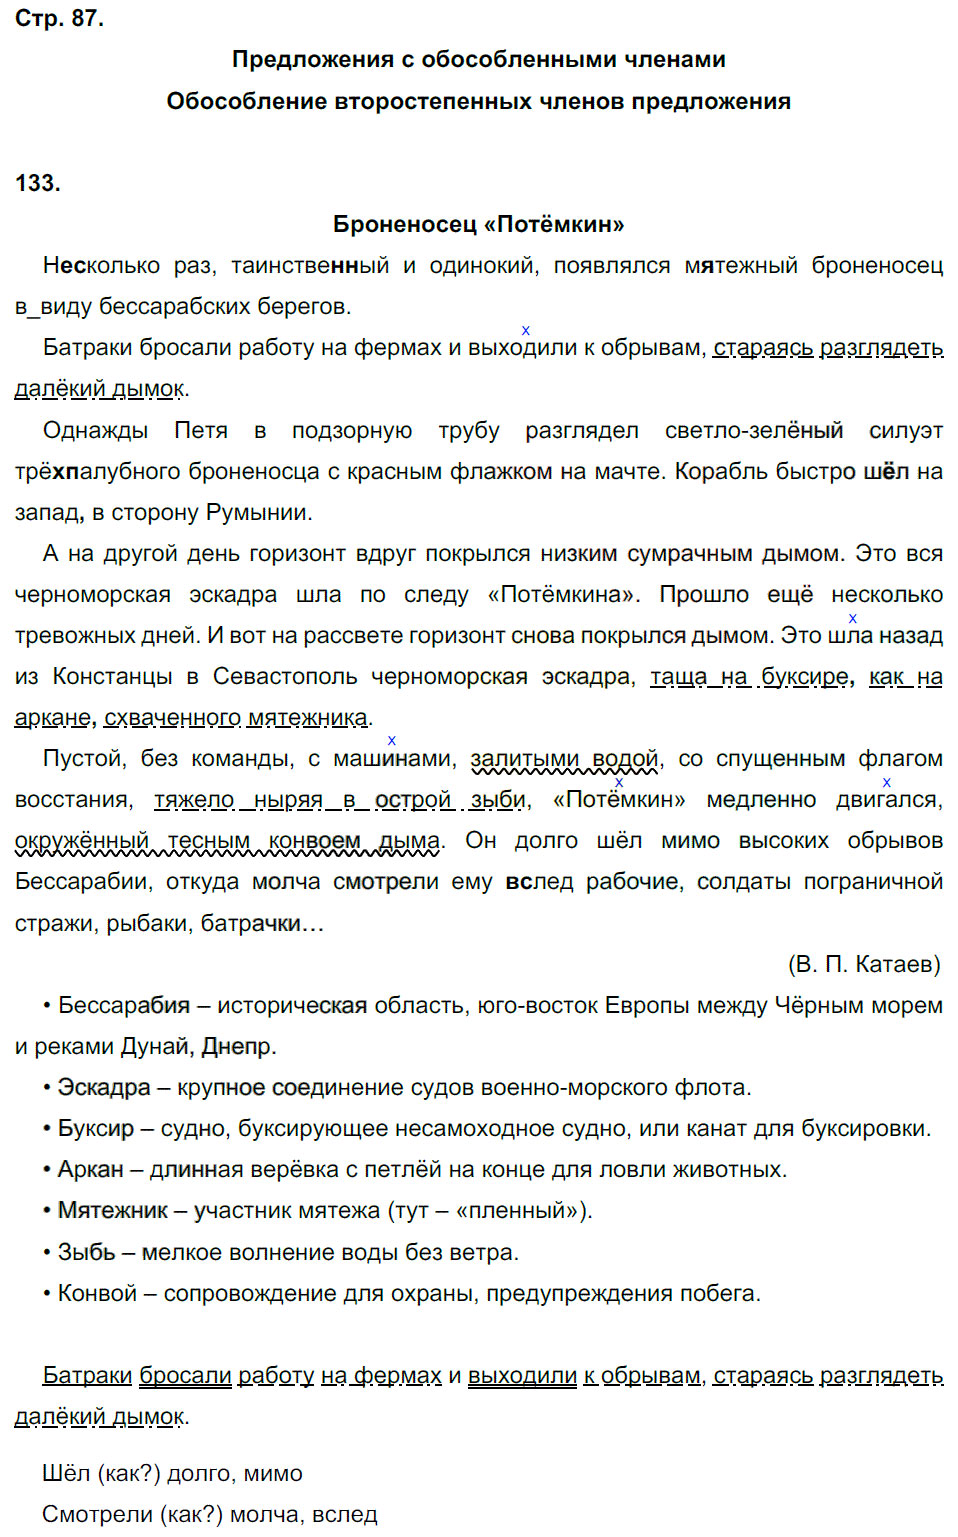 гдз 8 класс рабочая тетрадь страница 87 русский язык Кулаева